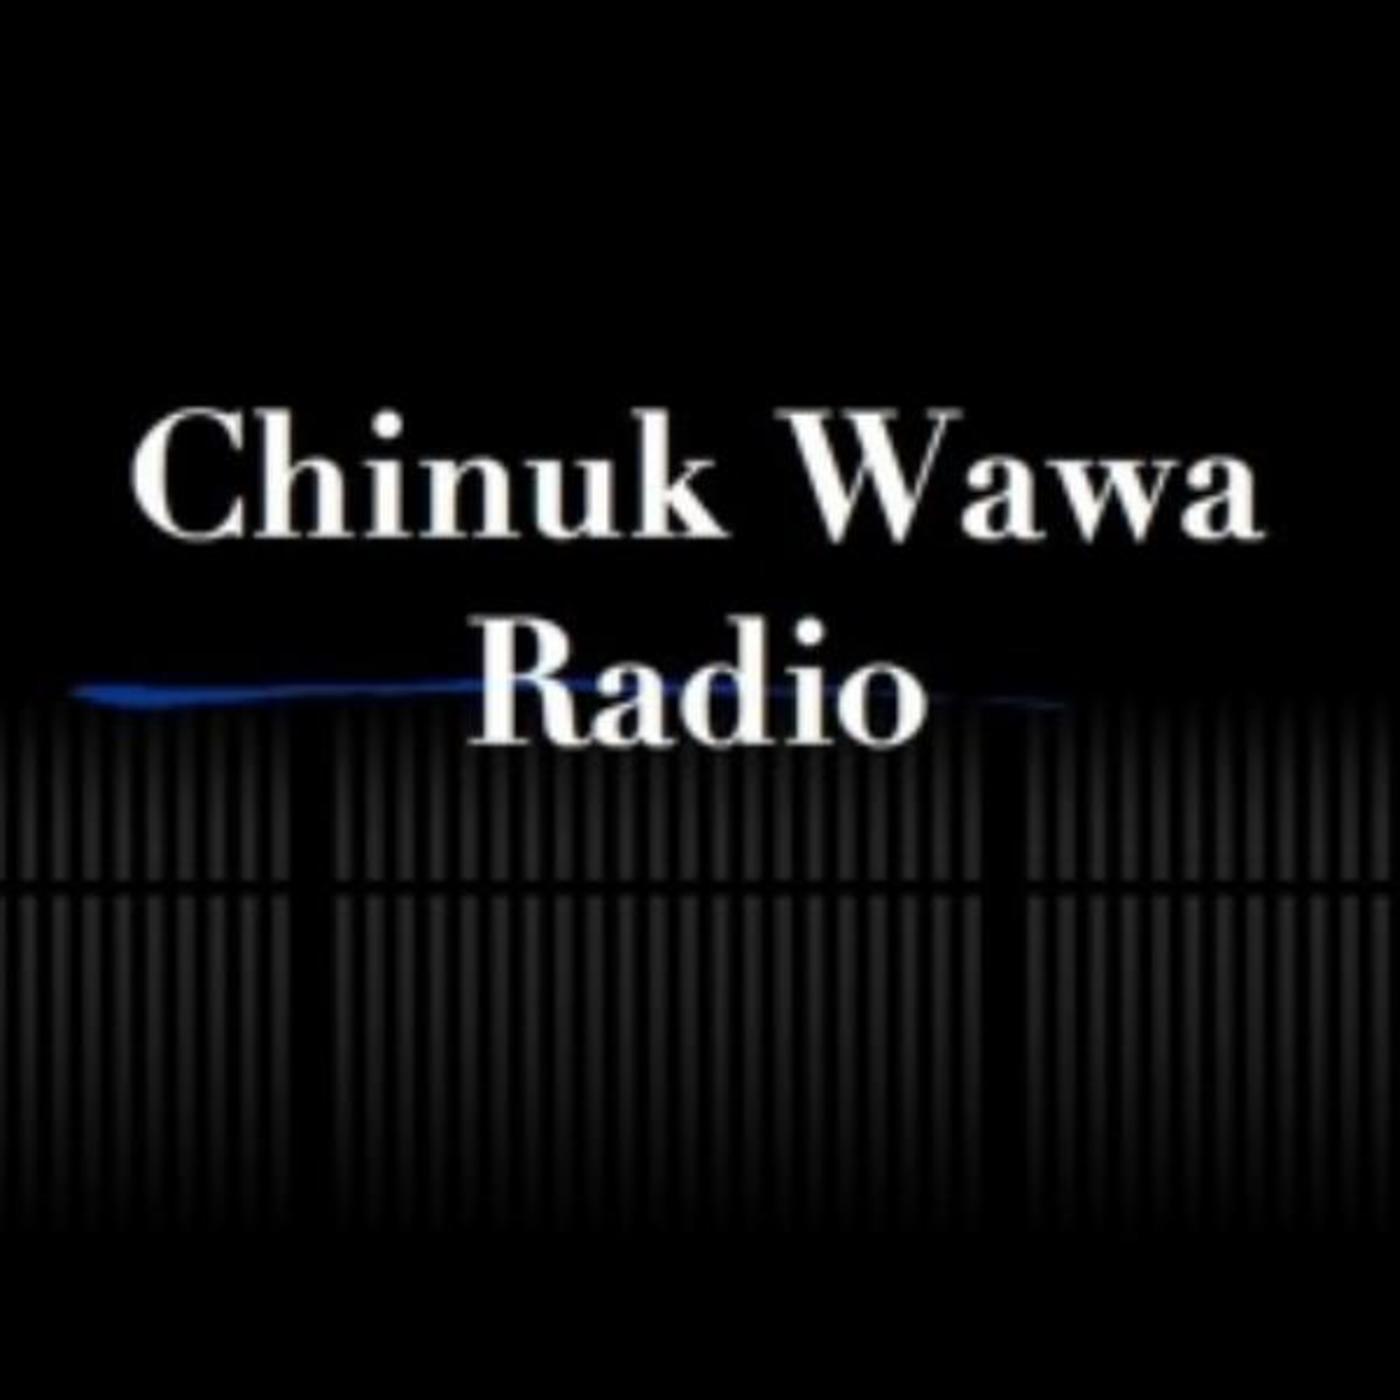 Chinuk Wawa Online Radio by Chinuk Wawa Radio | BlogTalkRadio